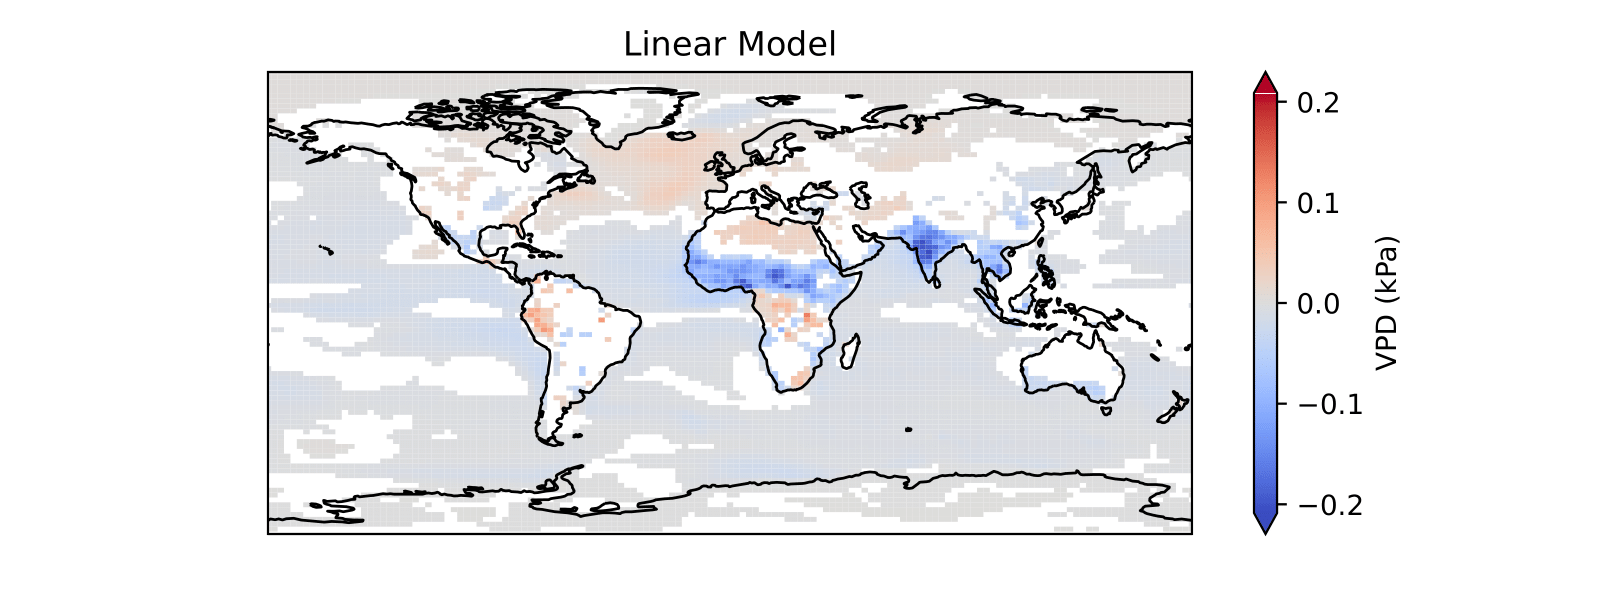 Linear Model Predictions